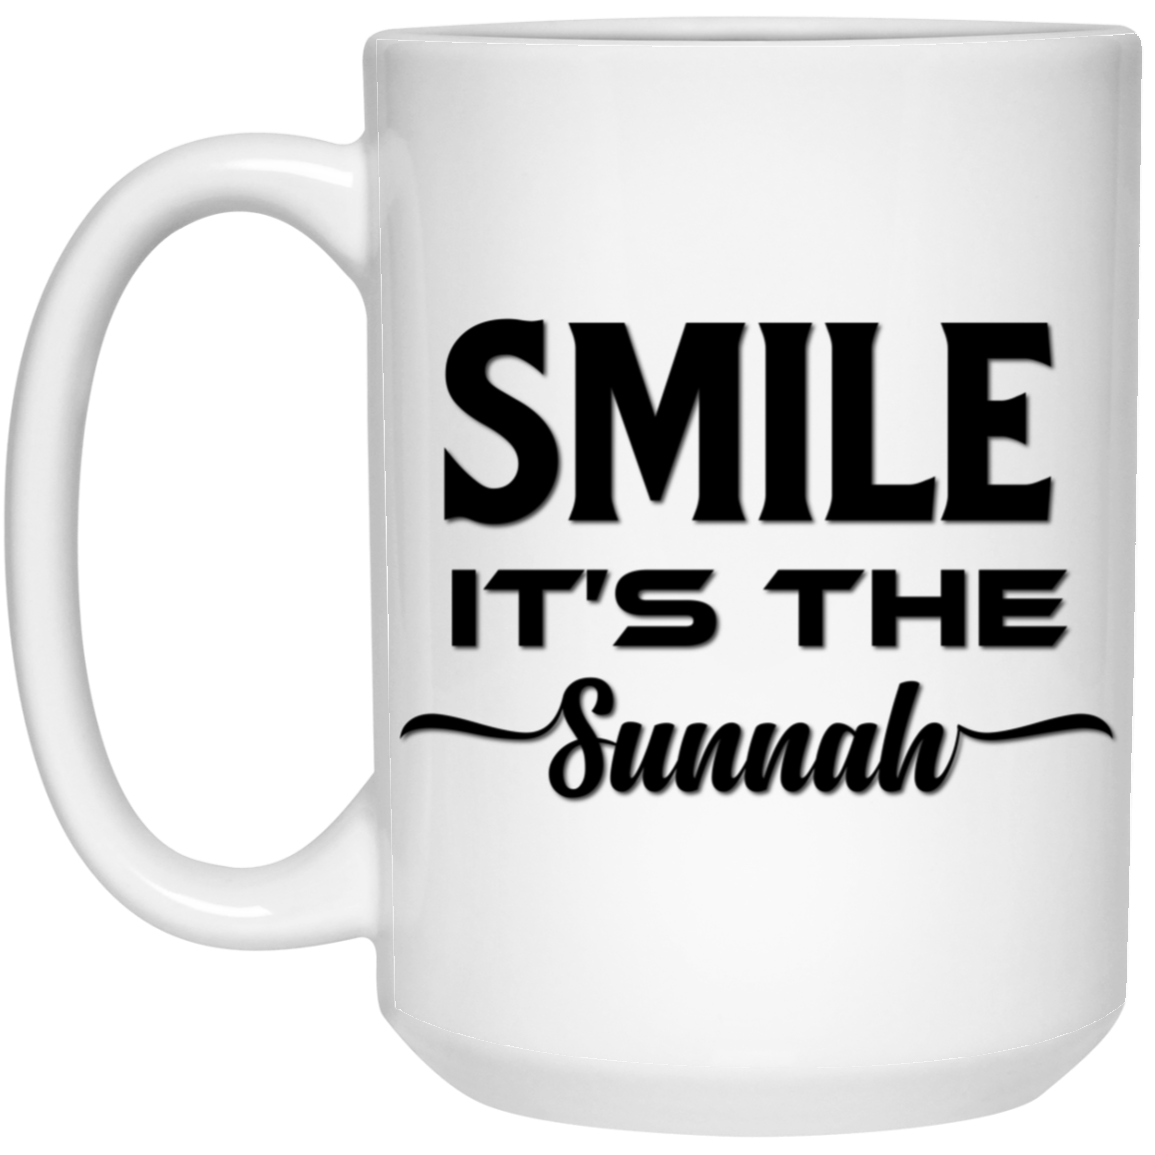 SMILE IT'S THE SUNNAH 15 oz. White Mug